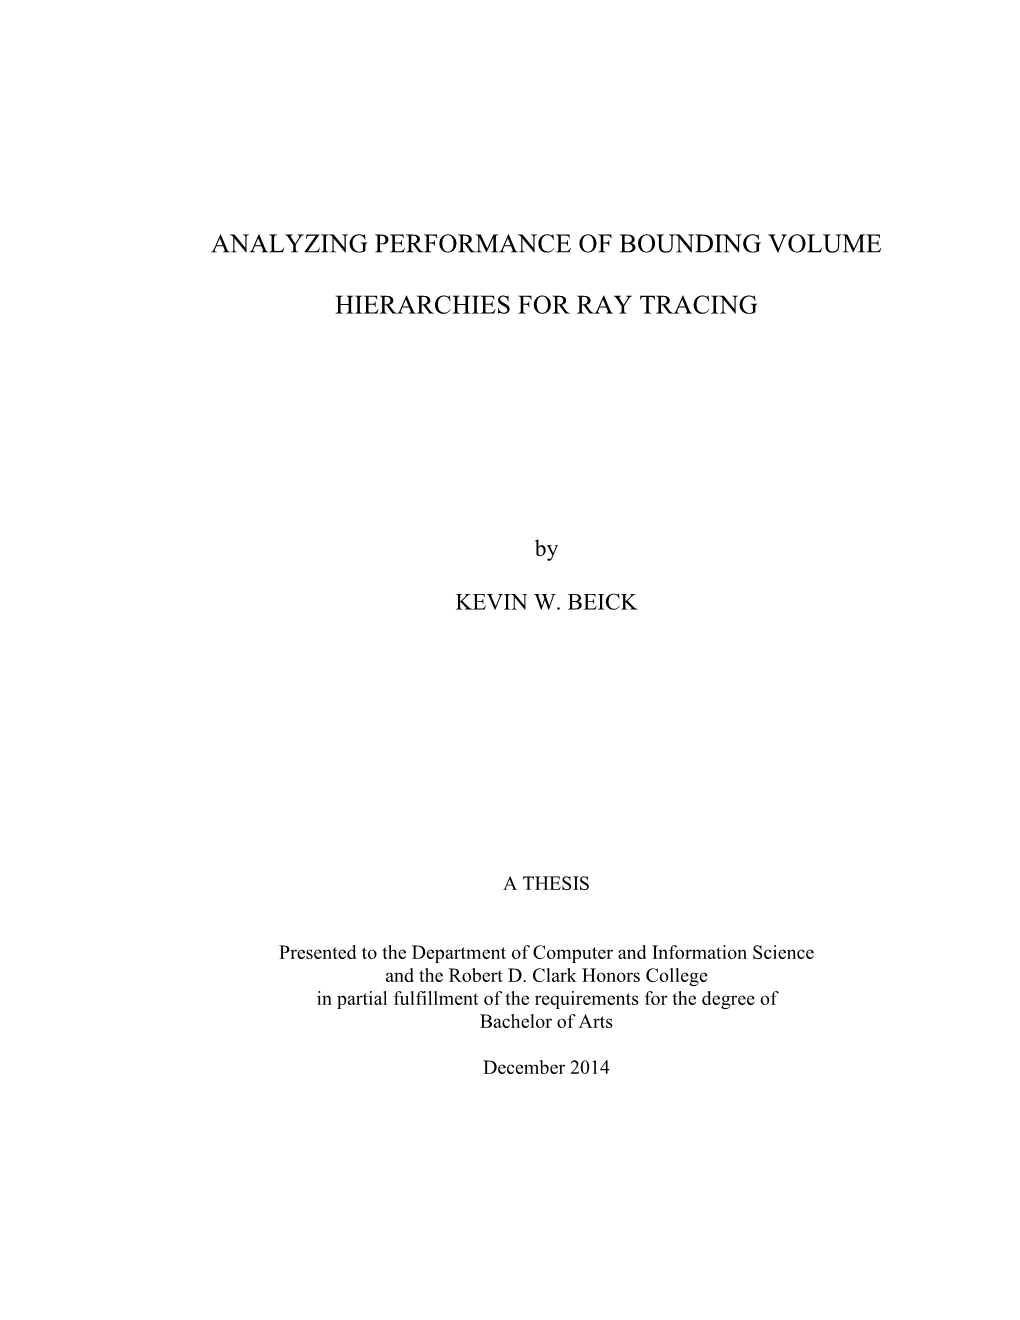 Analyzing Performance of Bounding Volume